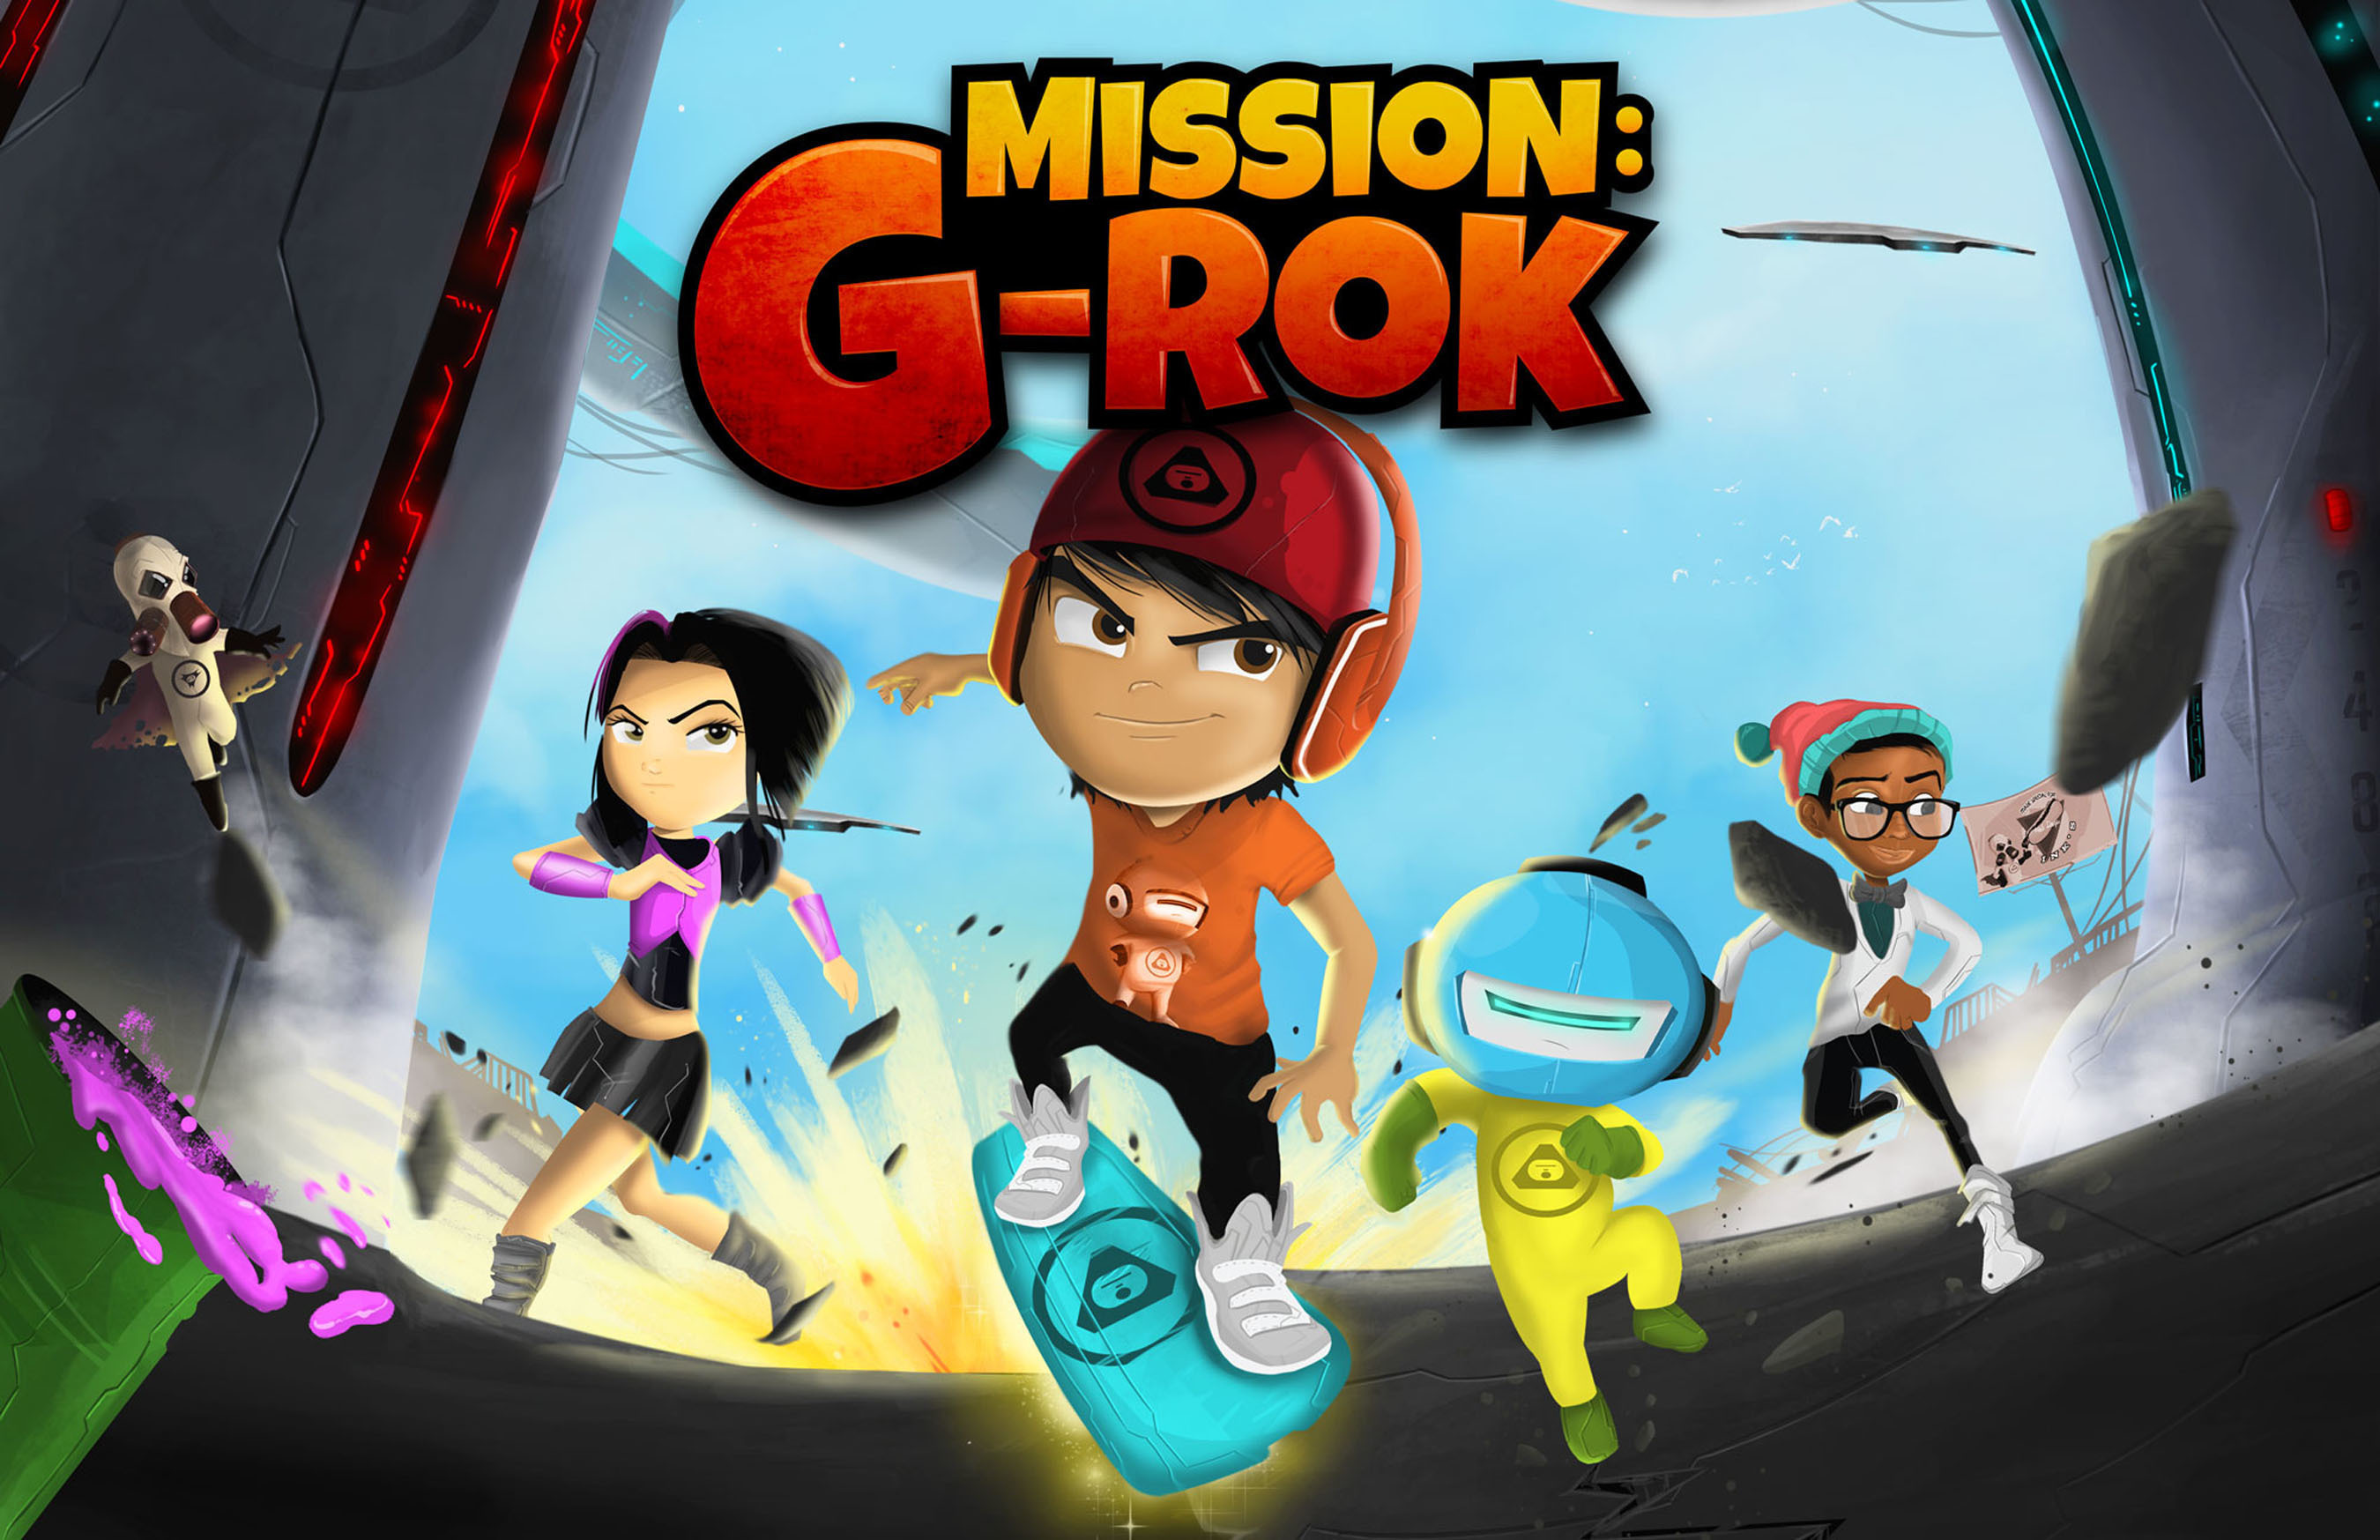 MISSION G-ROK by greenRok. (PRNewsFoto/greenROKS) (PRNewsFoto/greenROKS)